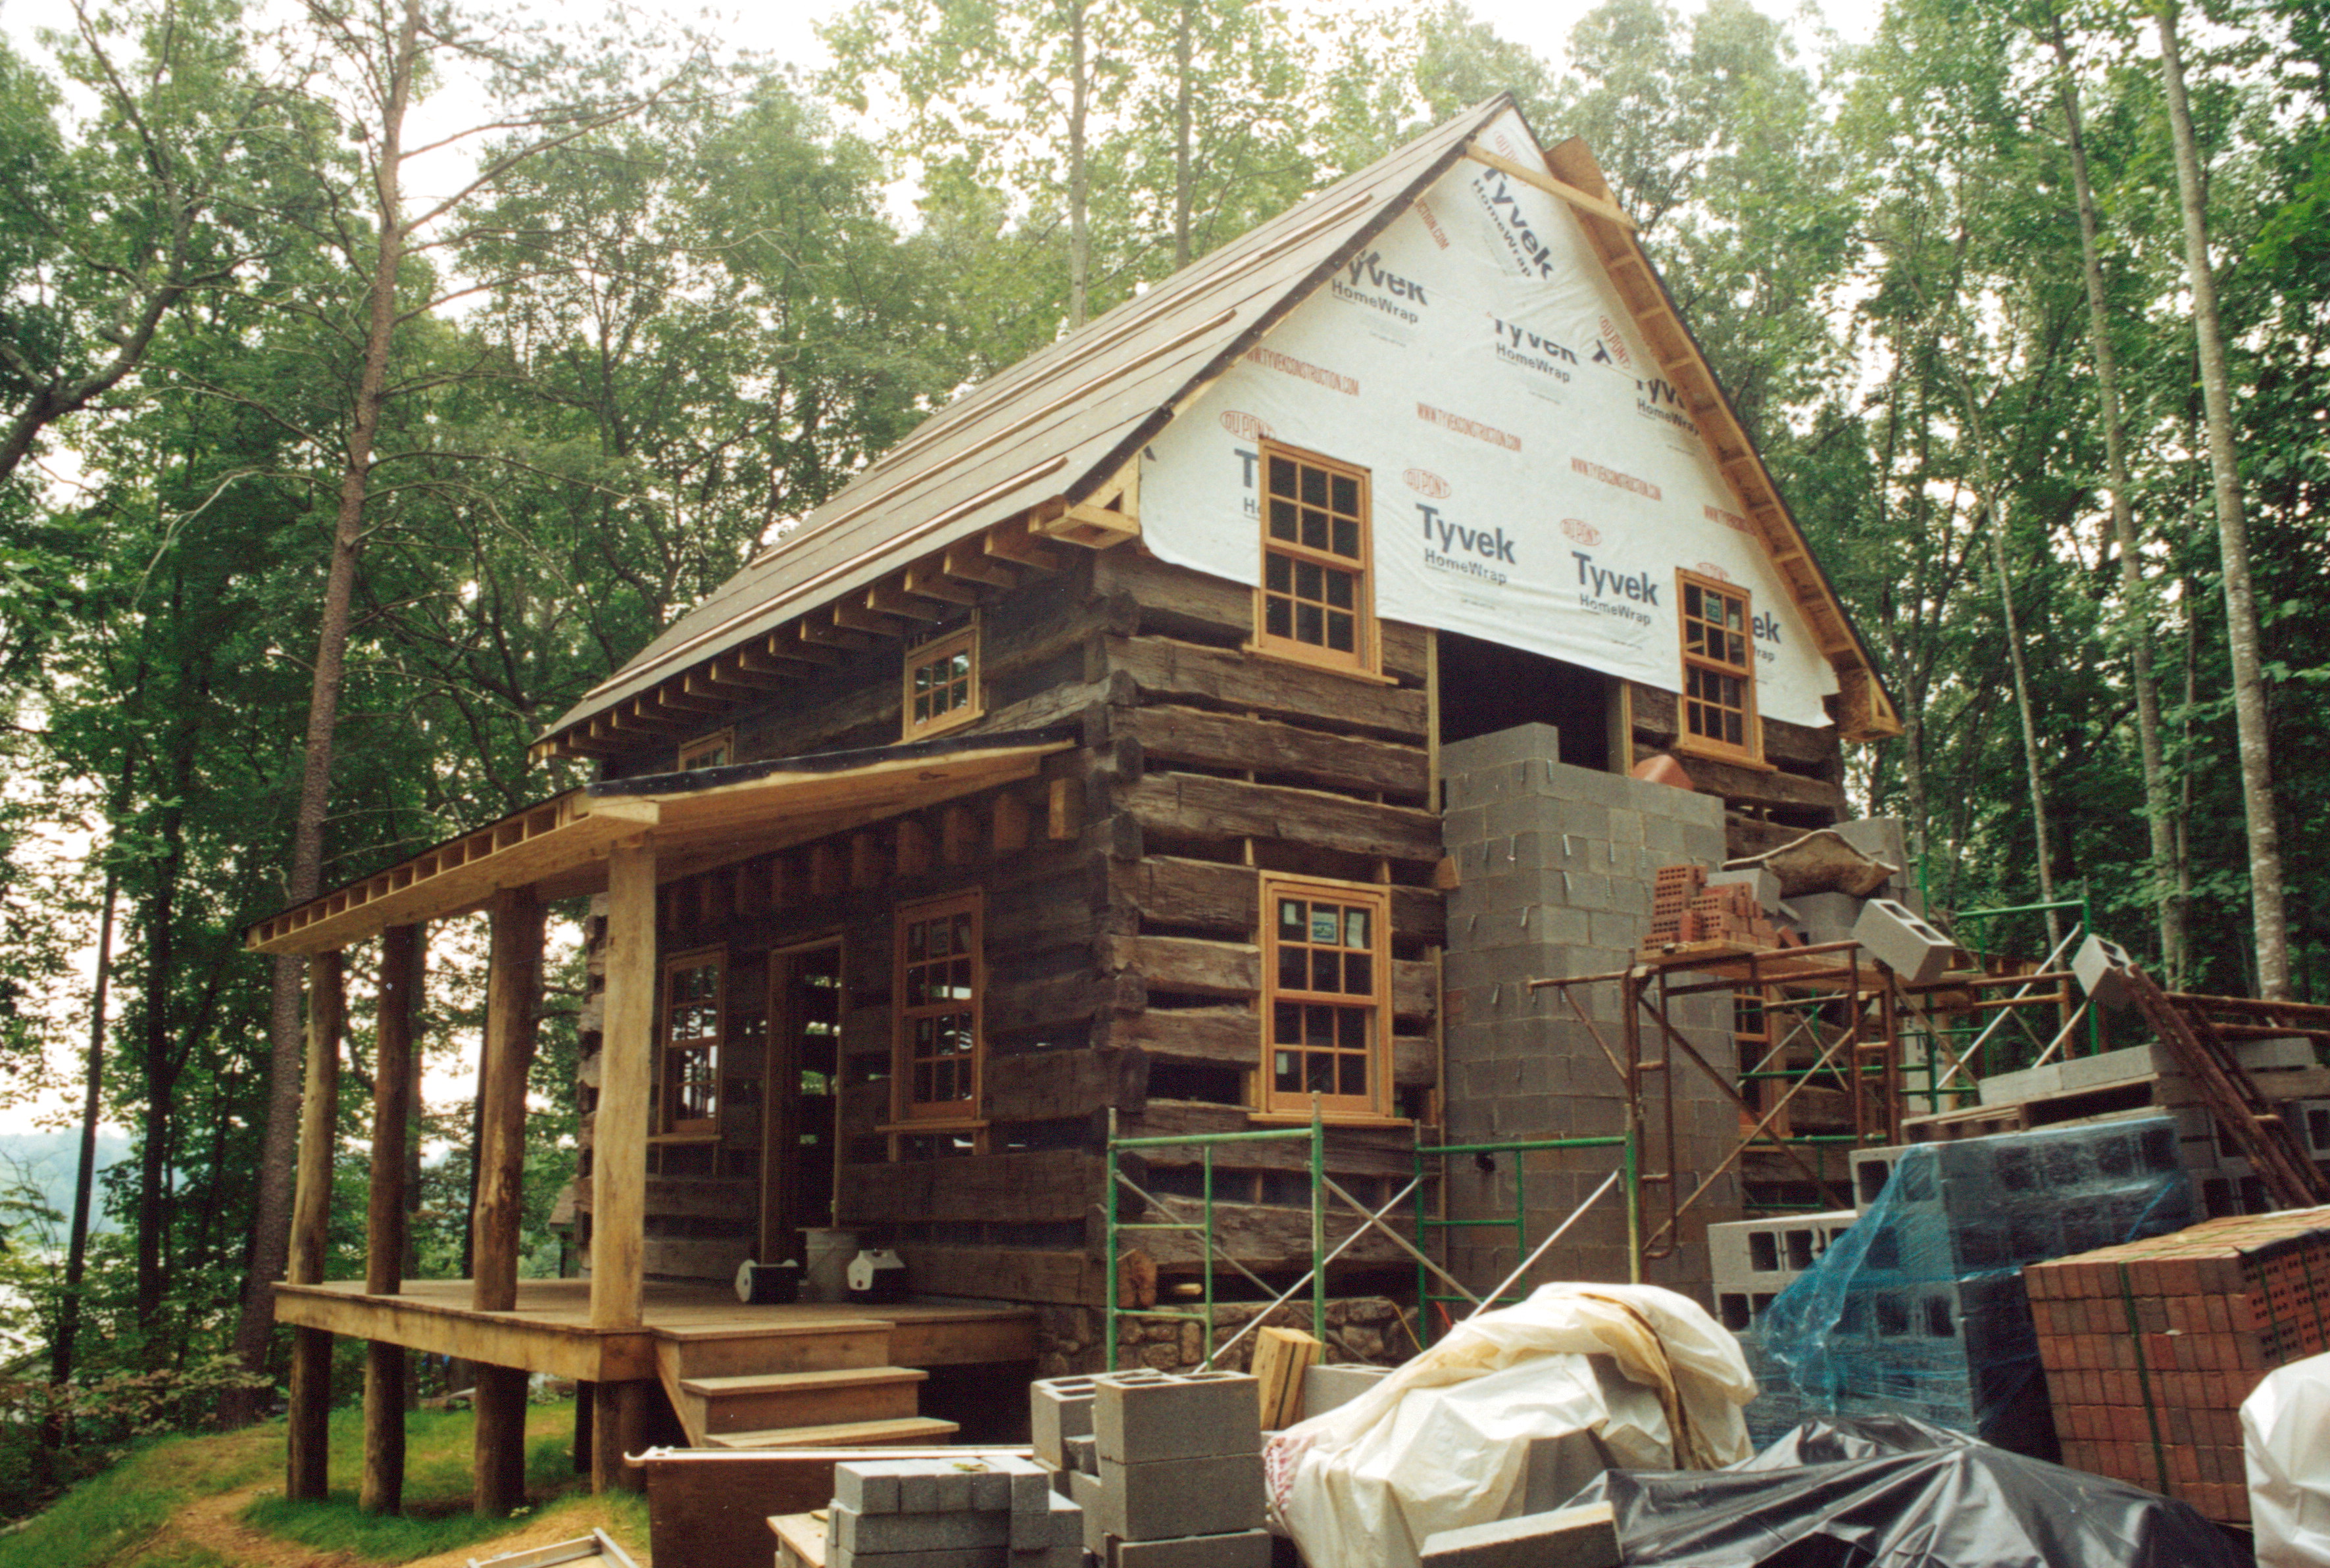 building a log cabin in canada